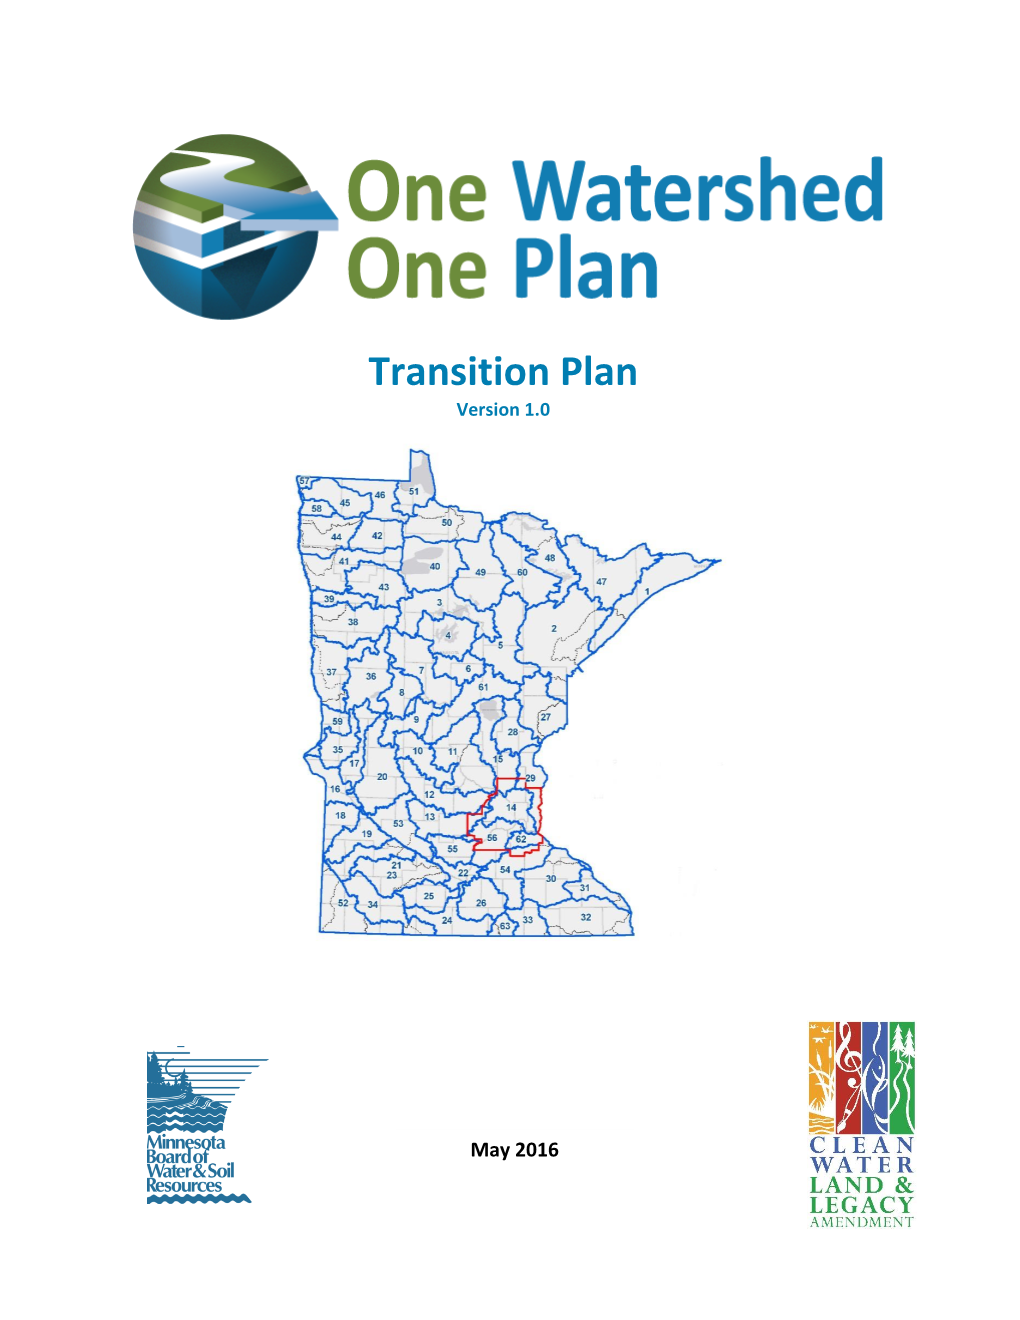 One Watershed, One Plan Transition Plan